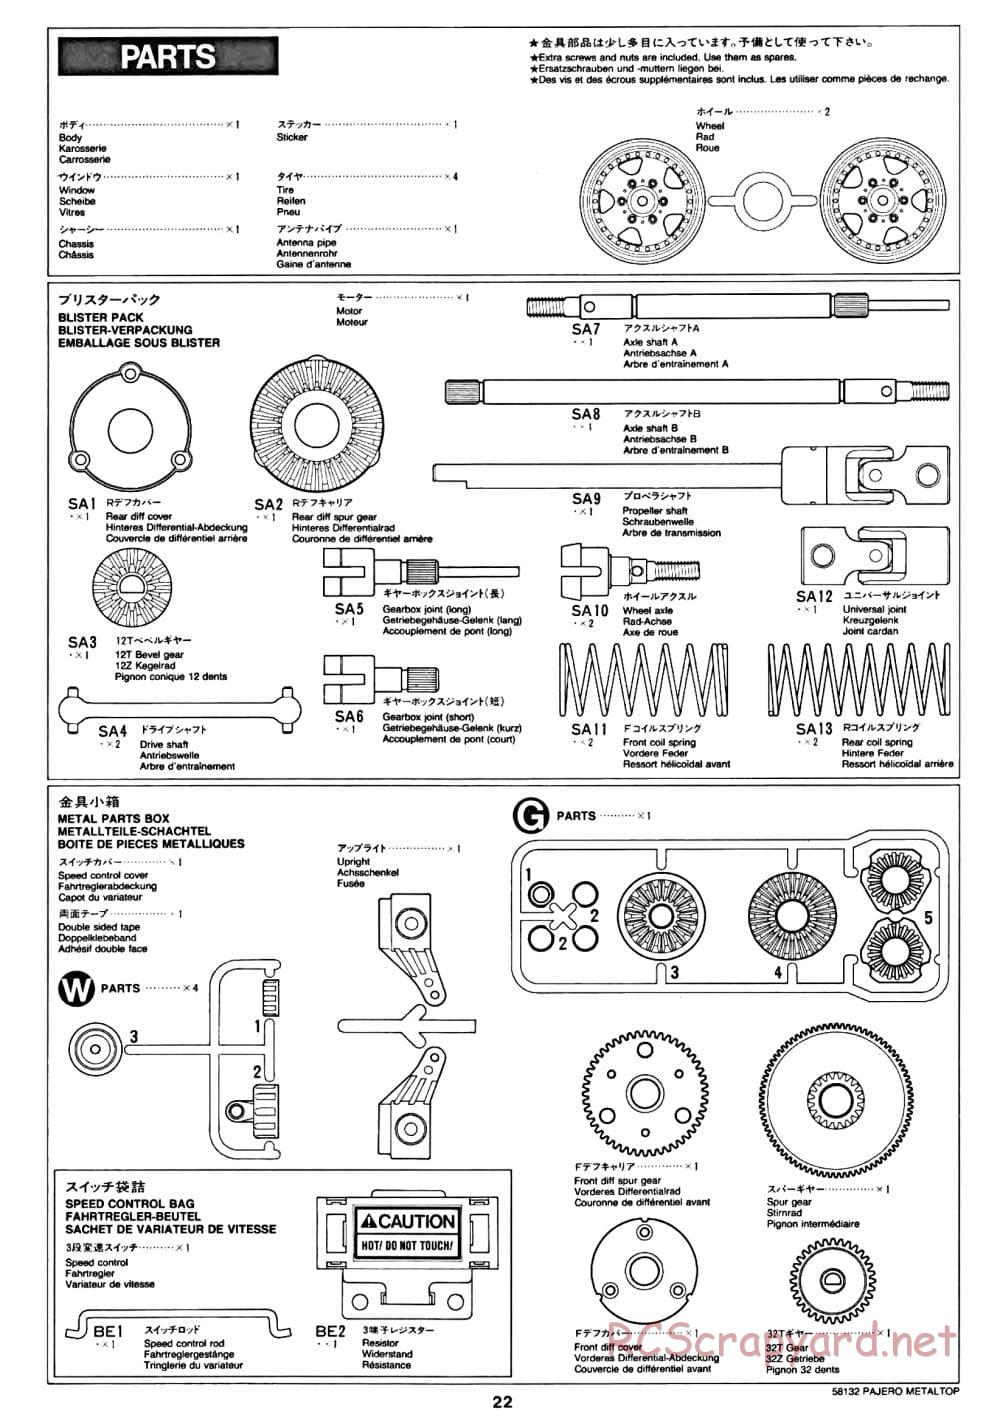 Tamiya - Mitsubishi Pajero Metaltop Wide - CC-01 Chassis - Manual - Page 22